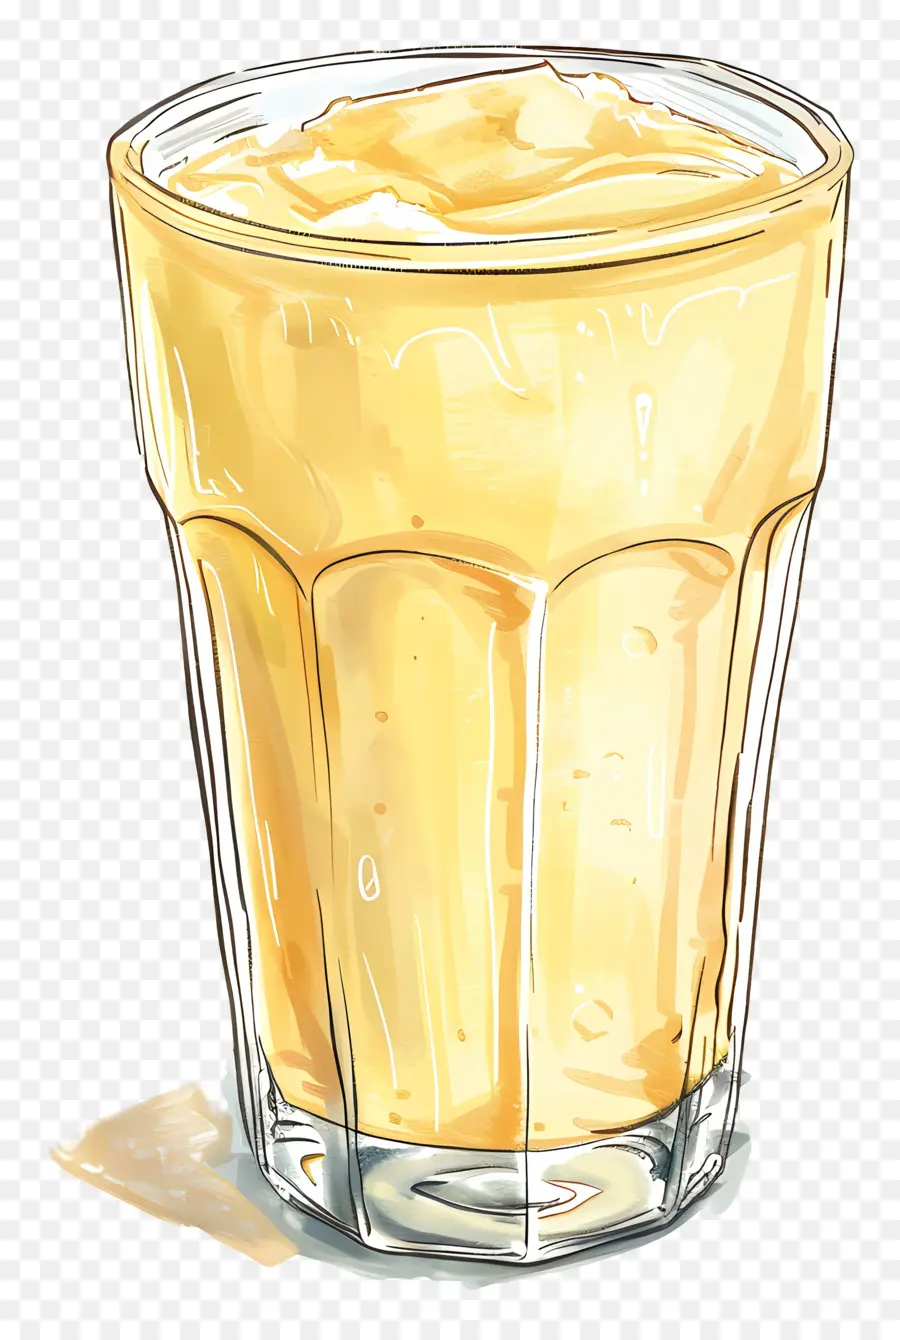 buttermilk drink orange juice glass frothy bubbly